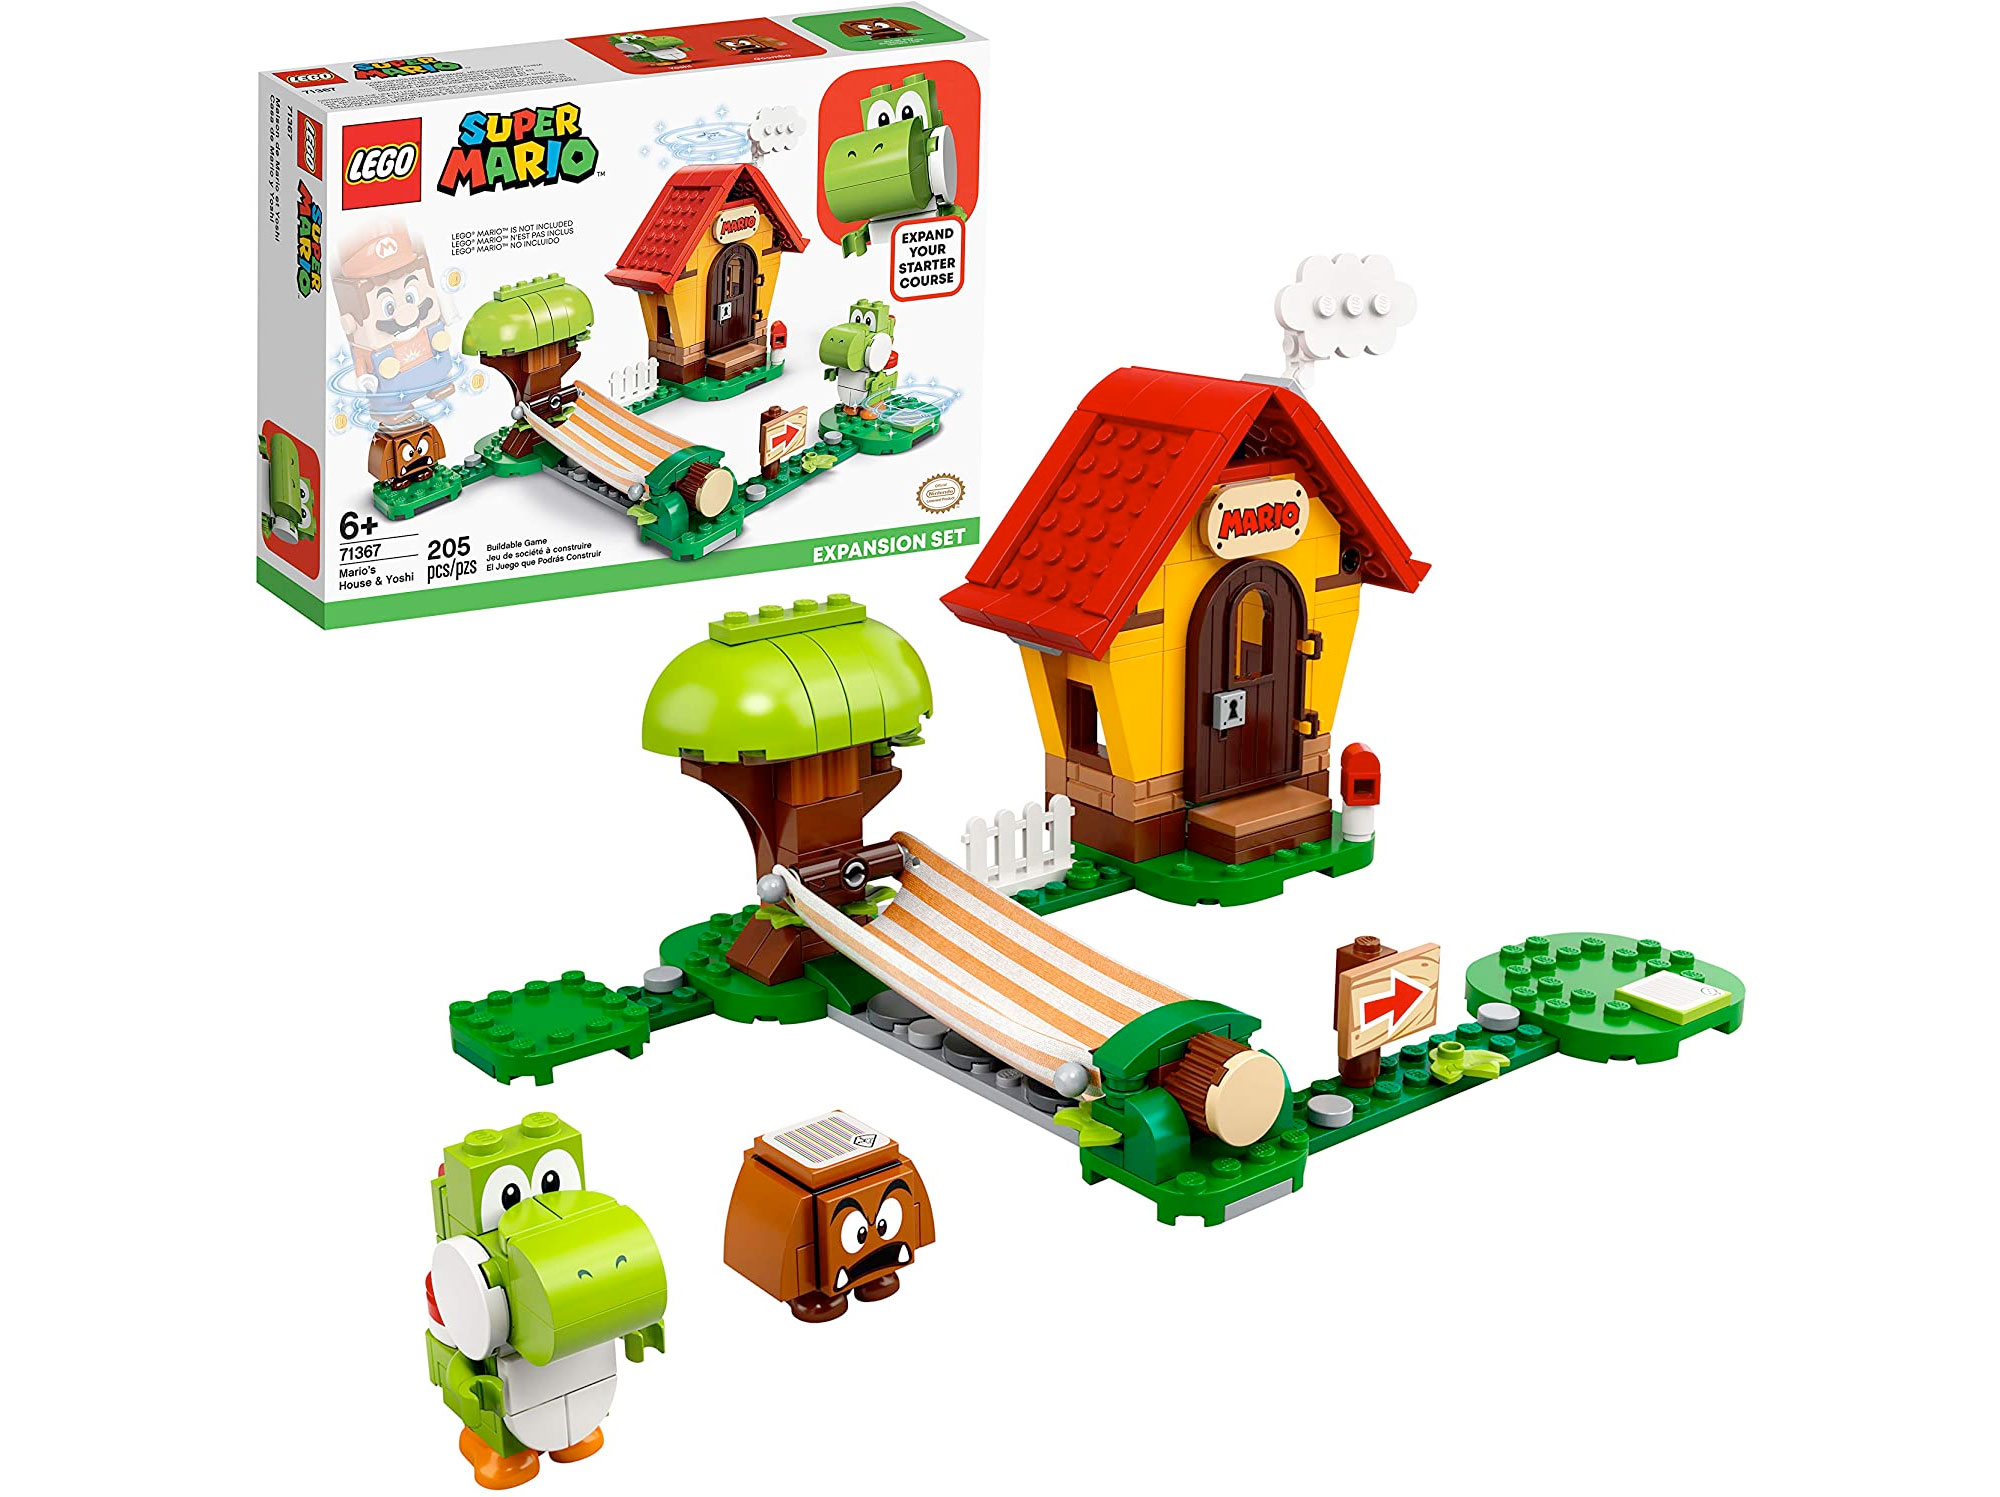 Amazon：LEGO Super Mario Mario’s House & Yoshi Expansion Set 71367 (205 pcs)只卖$29.86